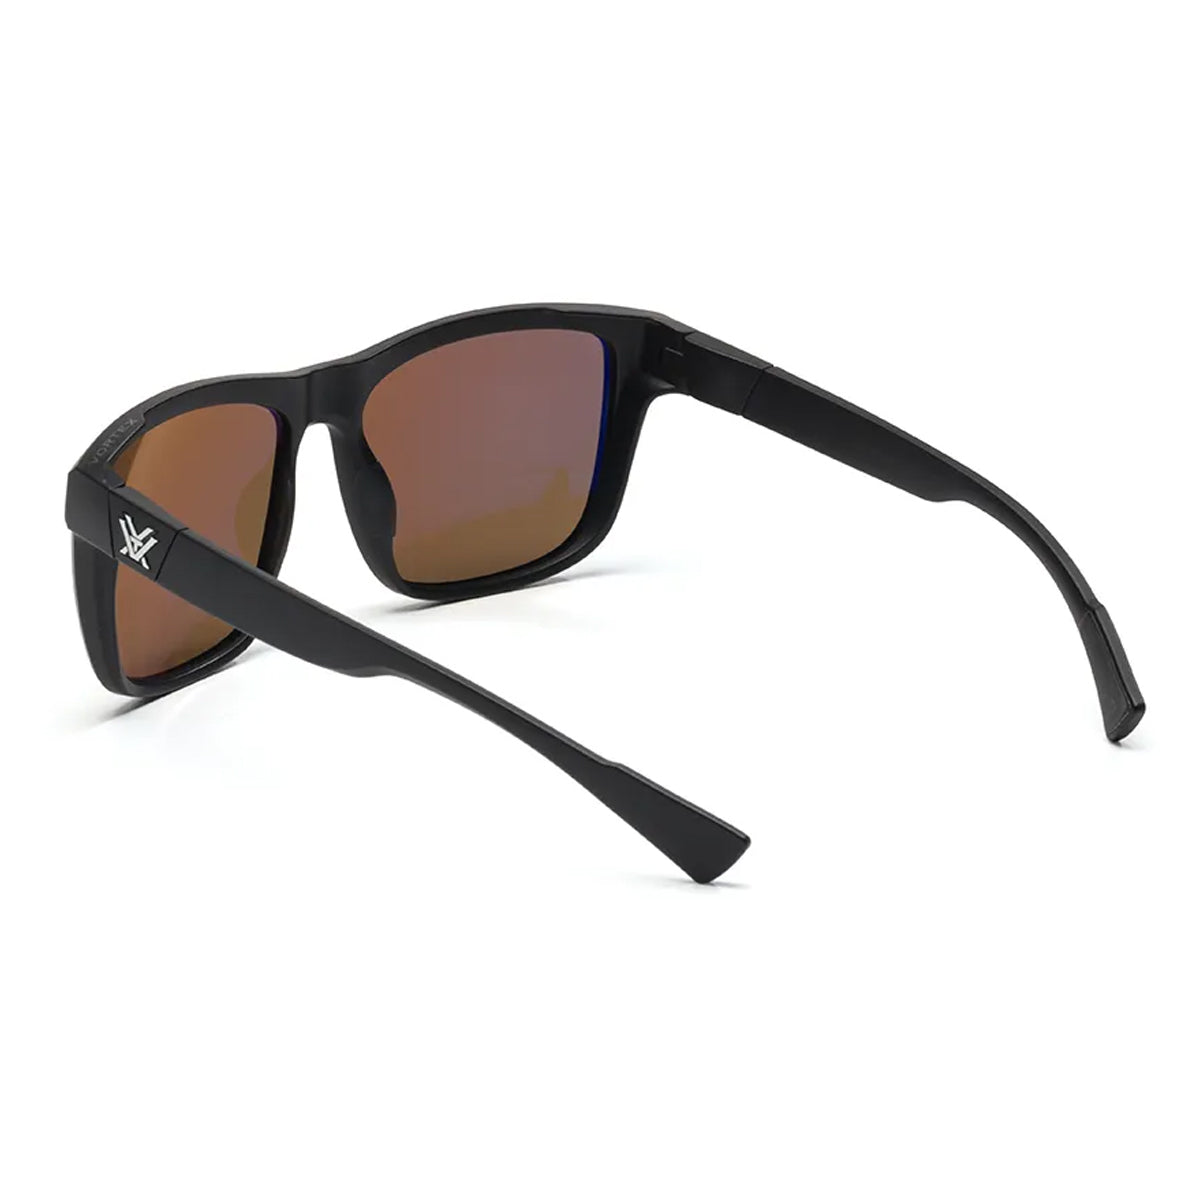 Vortex Men's Banshee Sunglasses in Black & Amber by GOHUNT | Vortex Optics - GOHUNT Shop